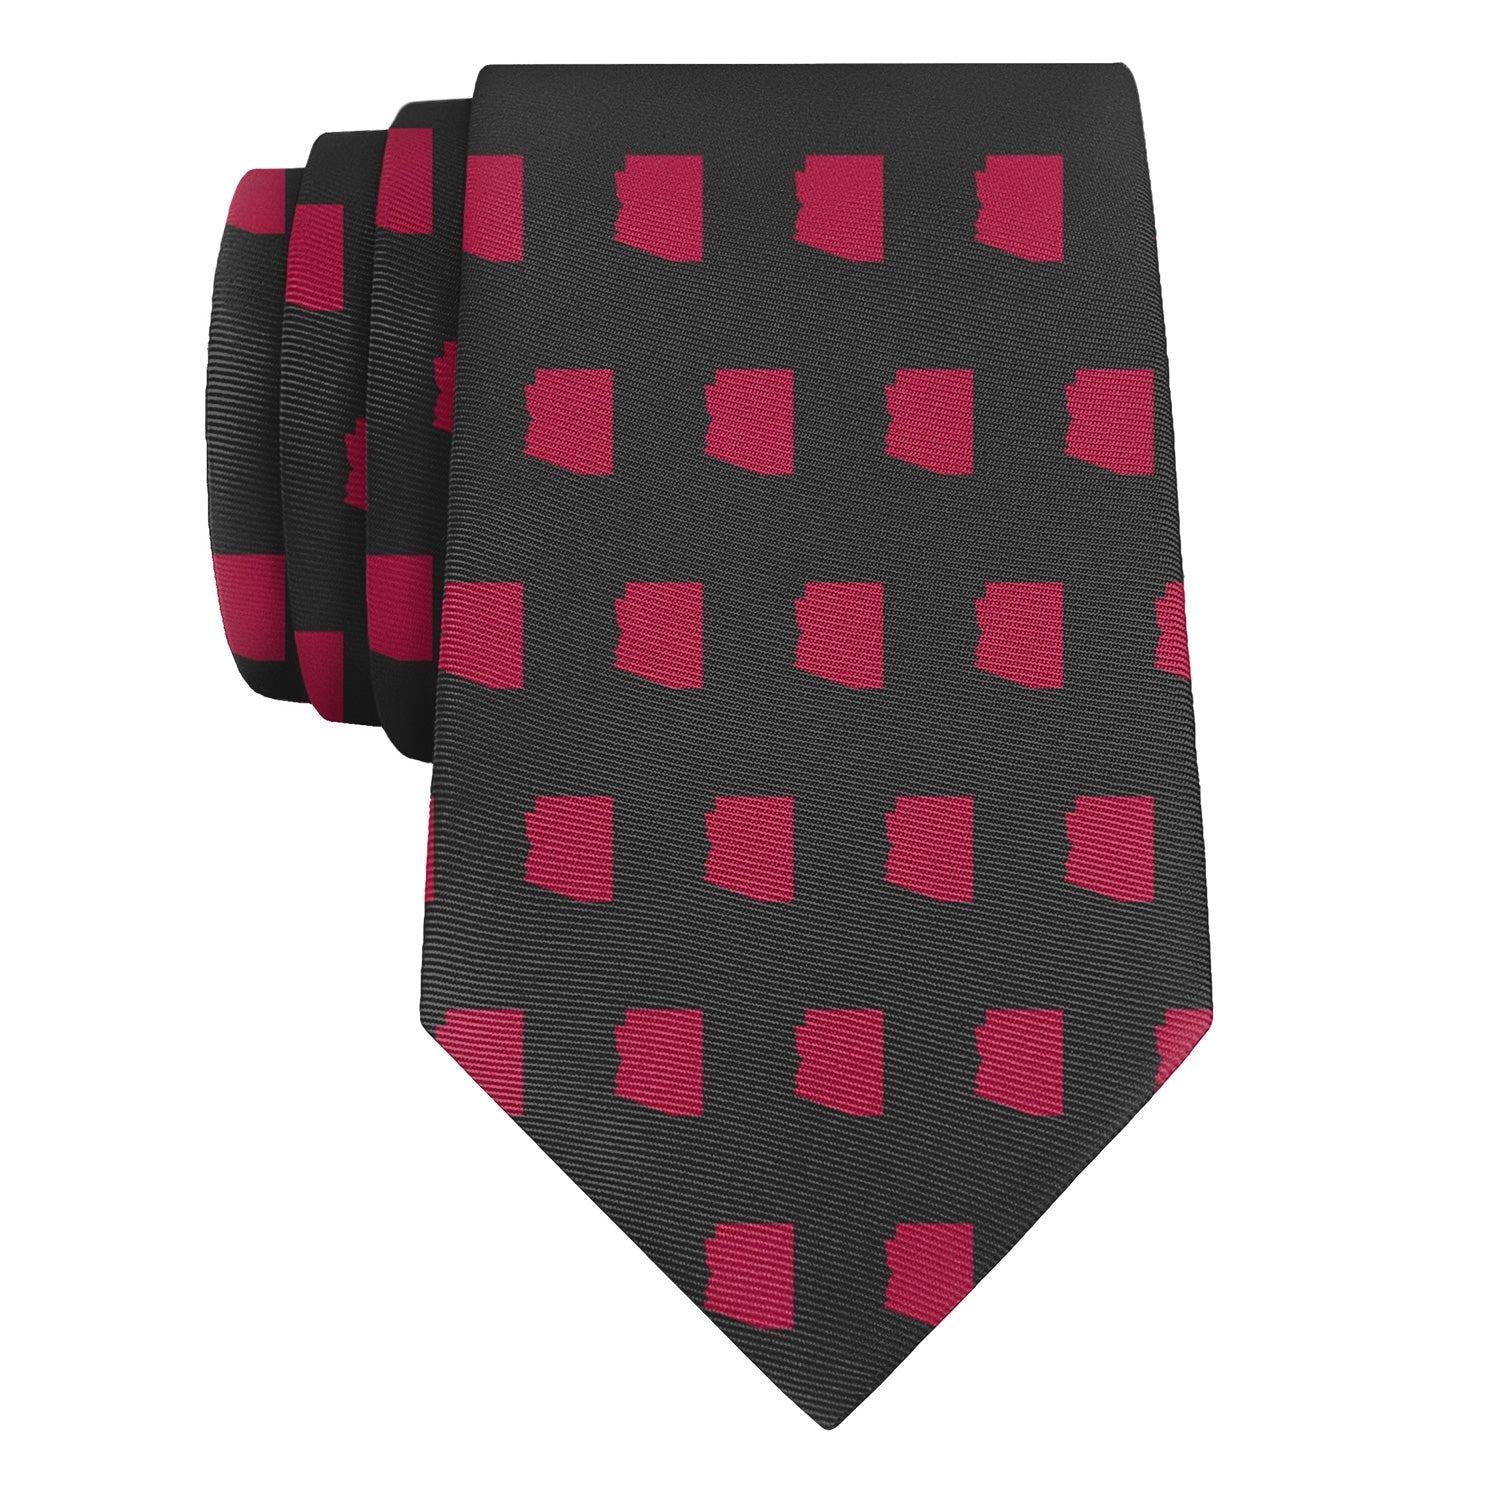 Arizona State Outline Necktie - Rolled - Knotty Tie Co.